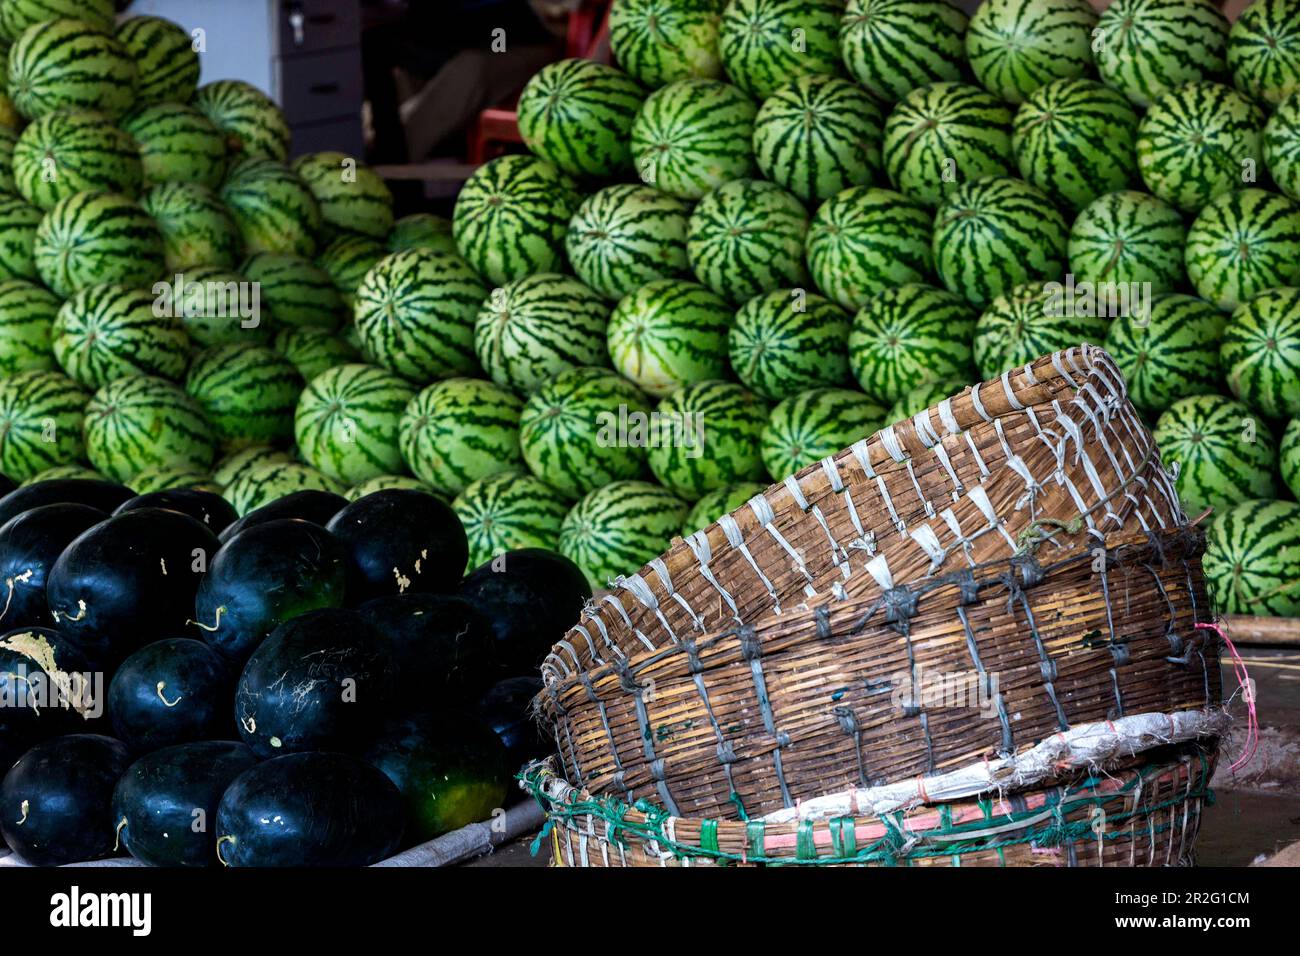 Crawford Market, heute Mahatma Jyotiba Phule Market, Großhandelsmarkt hauptsächlich für Obst und Gemüse, Melonen, Mumbai, Maharashtra, Indien Stockfoto